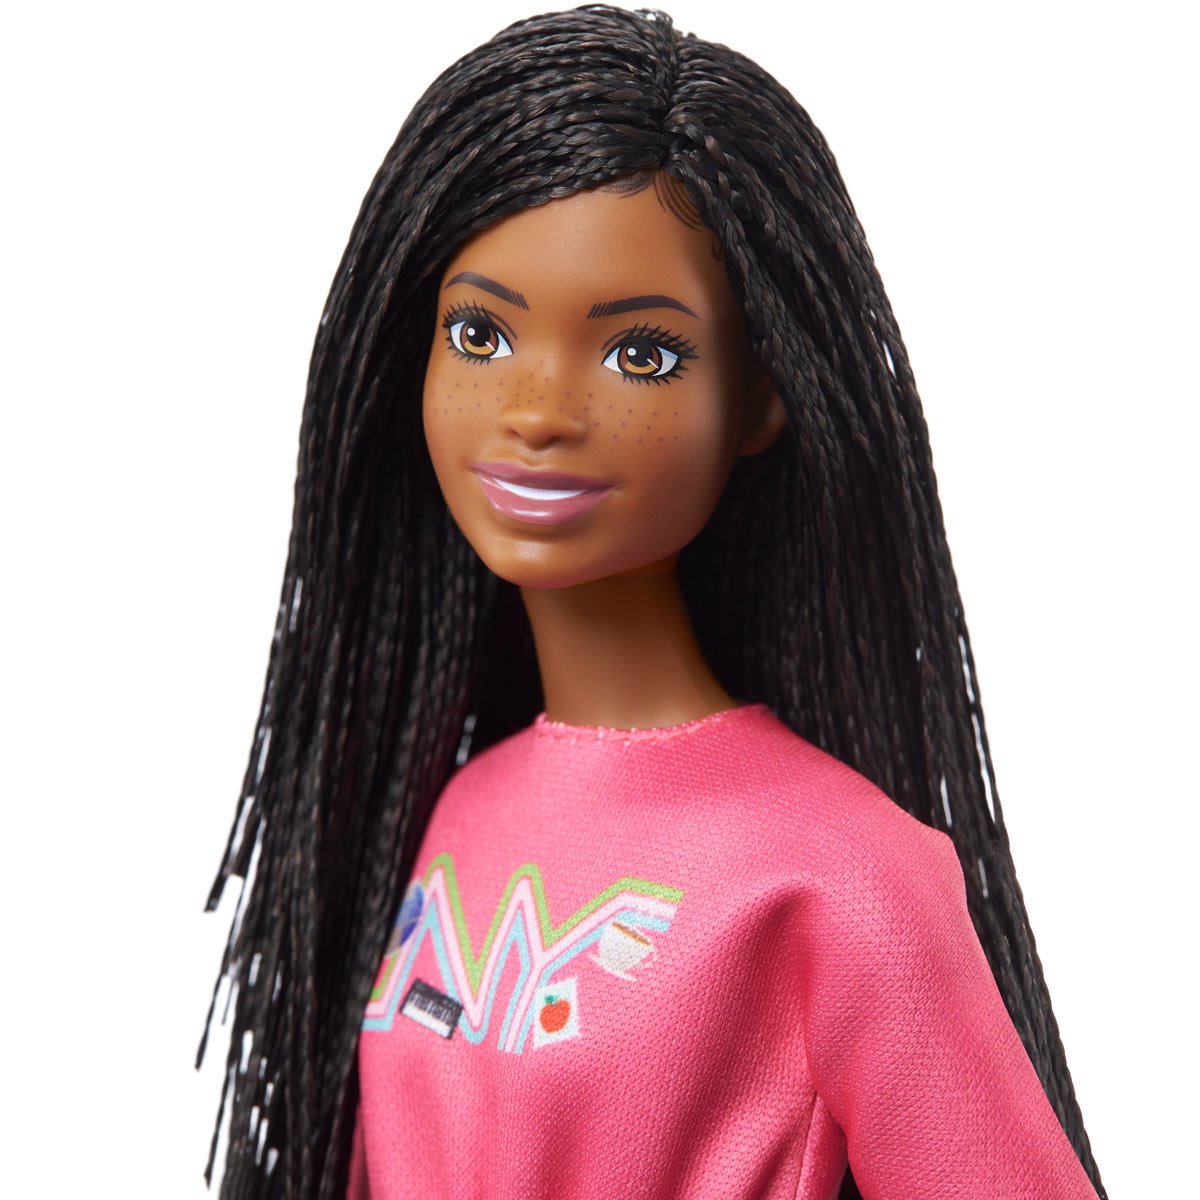 Barbie Malibu Roberts Stylist Doll - Entertainment Earth